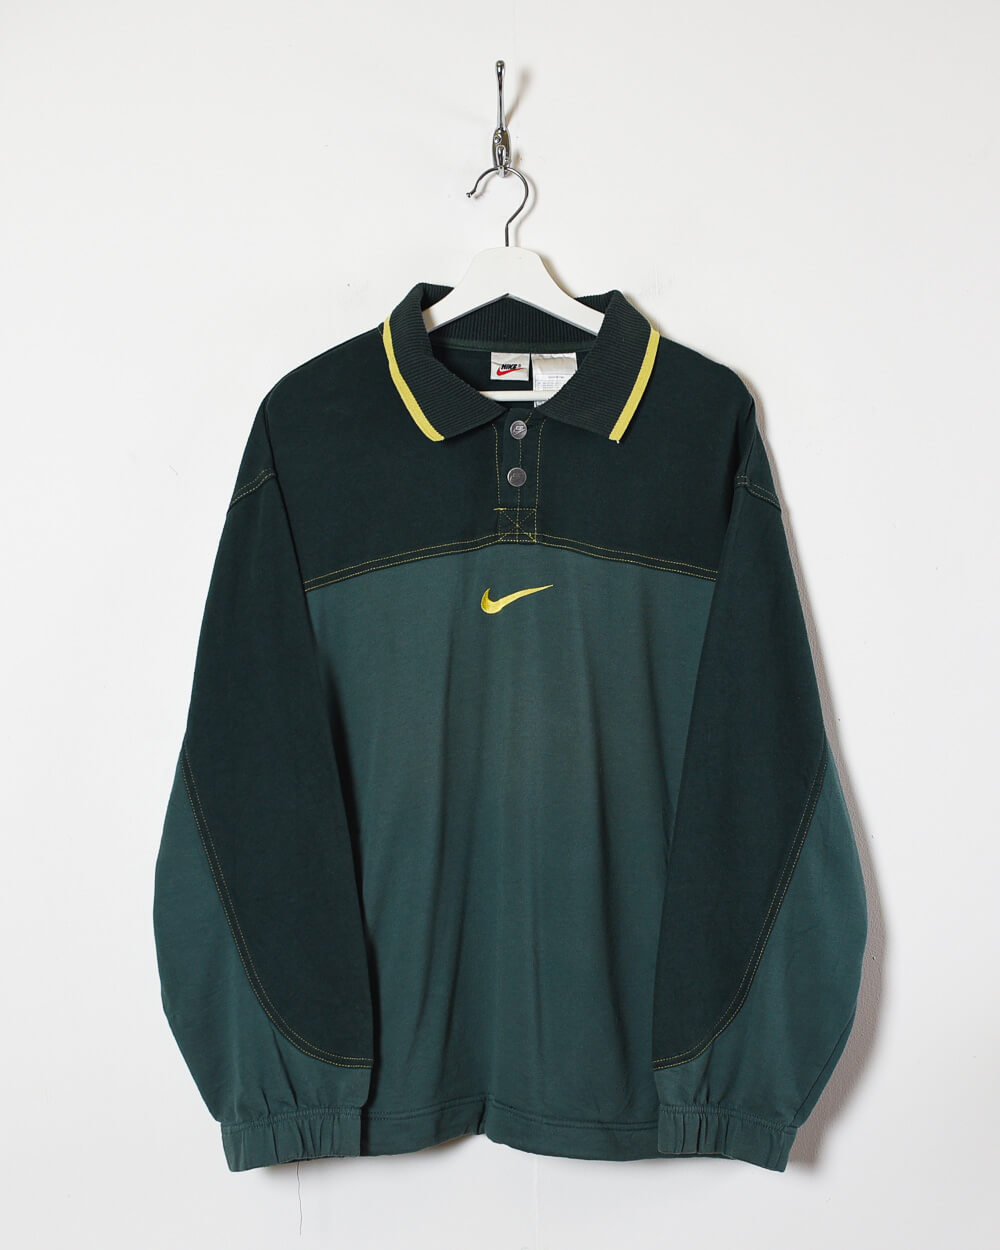 Green Nike Rugby Shirt - Medium